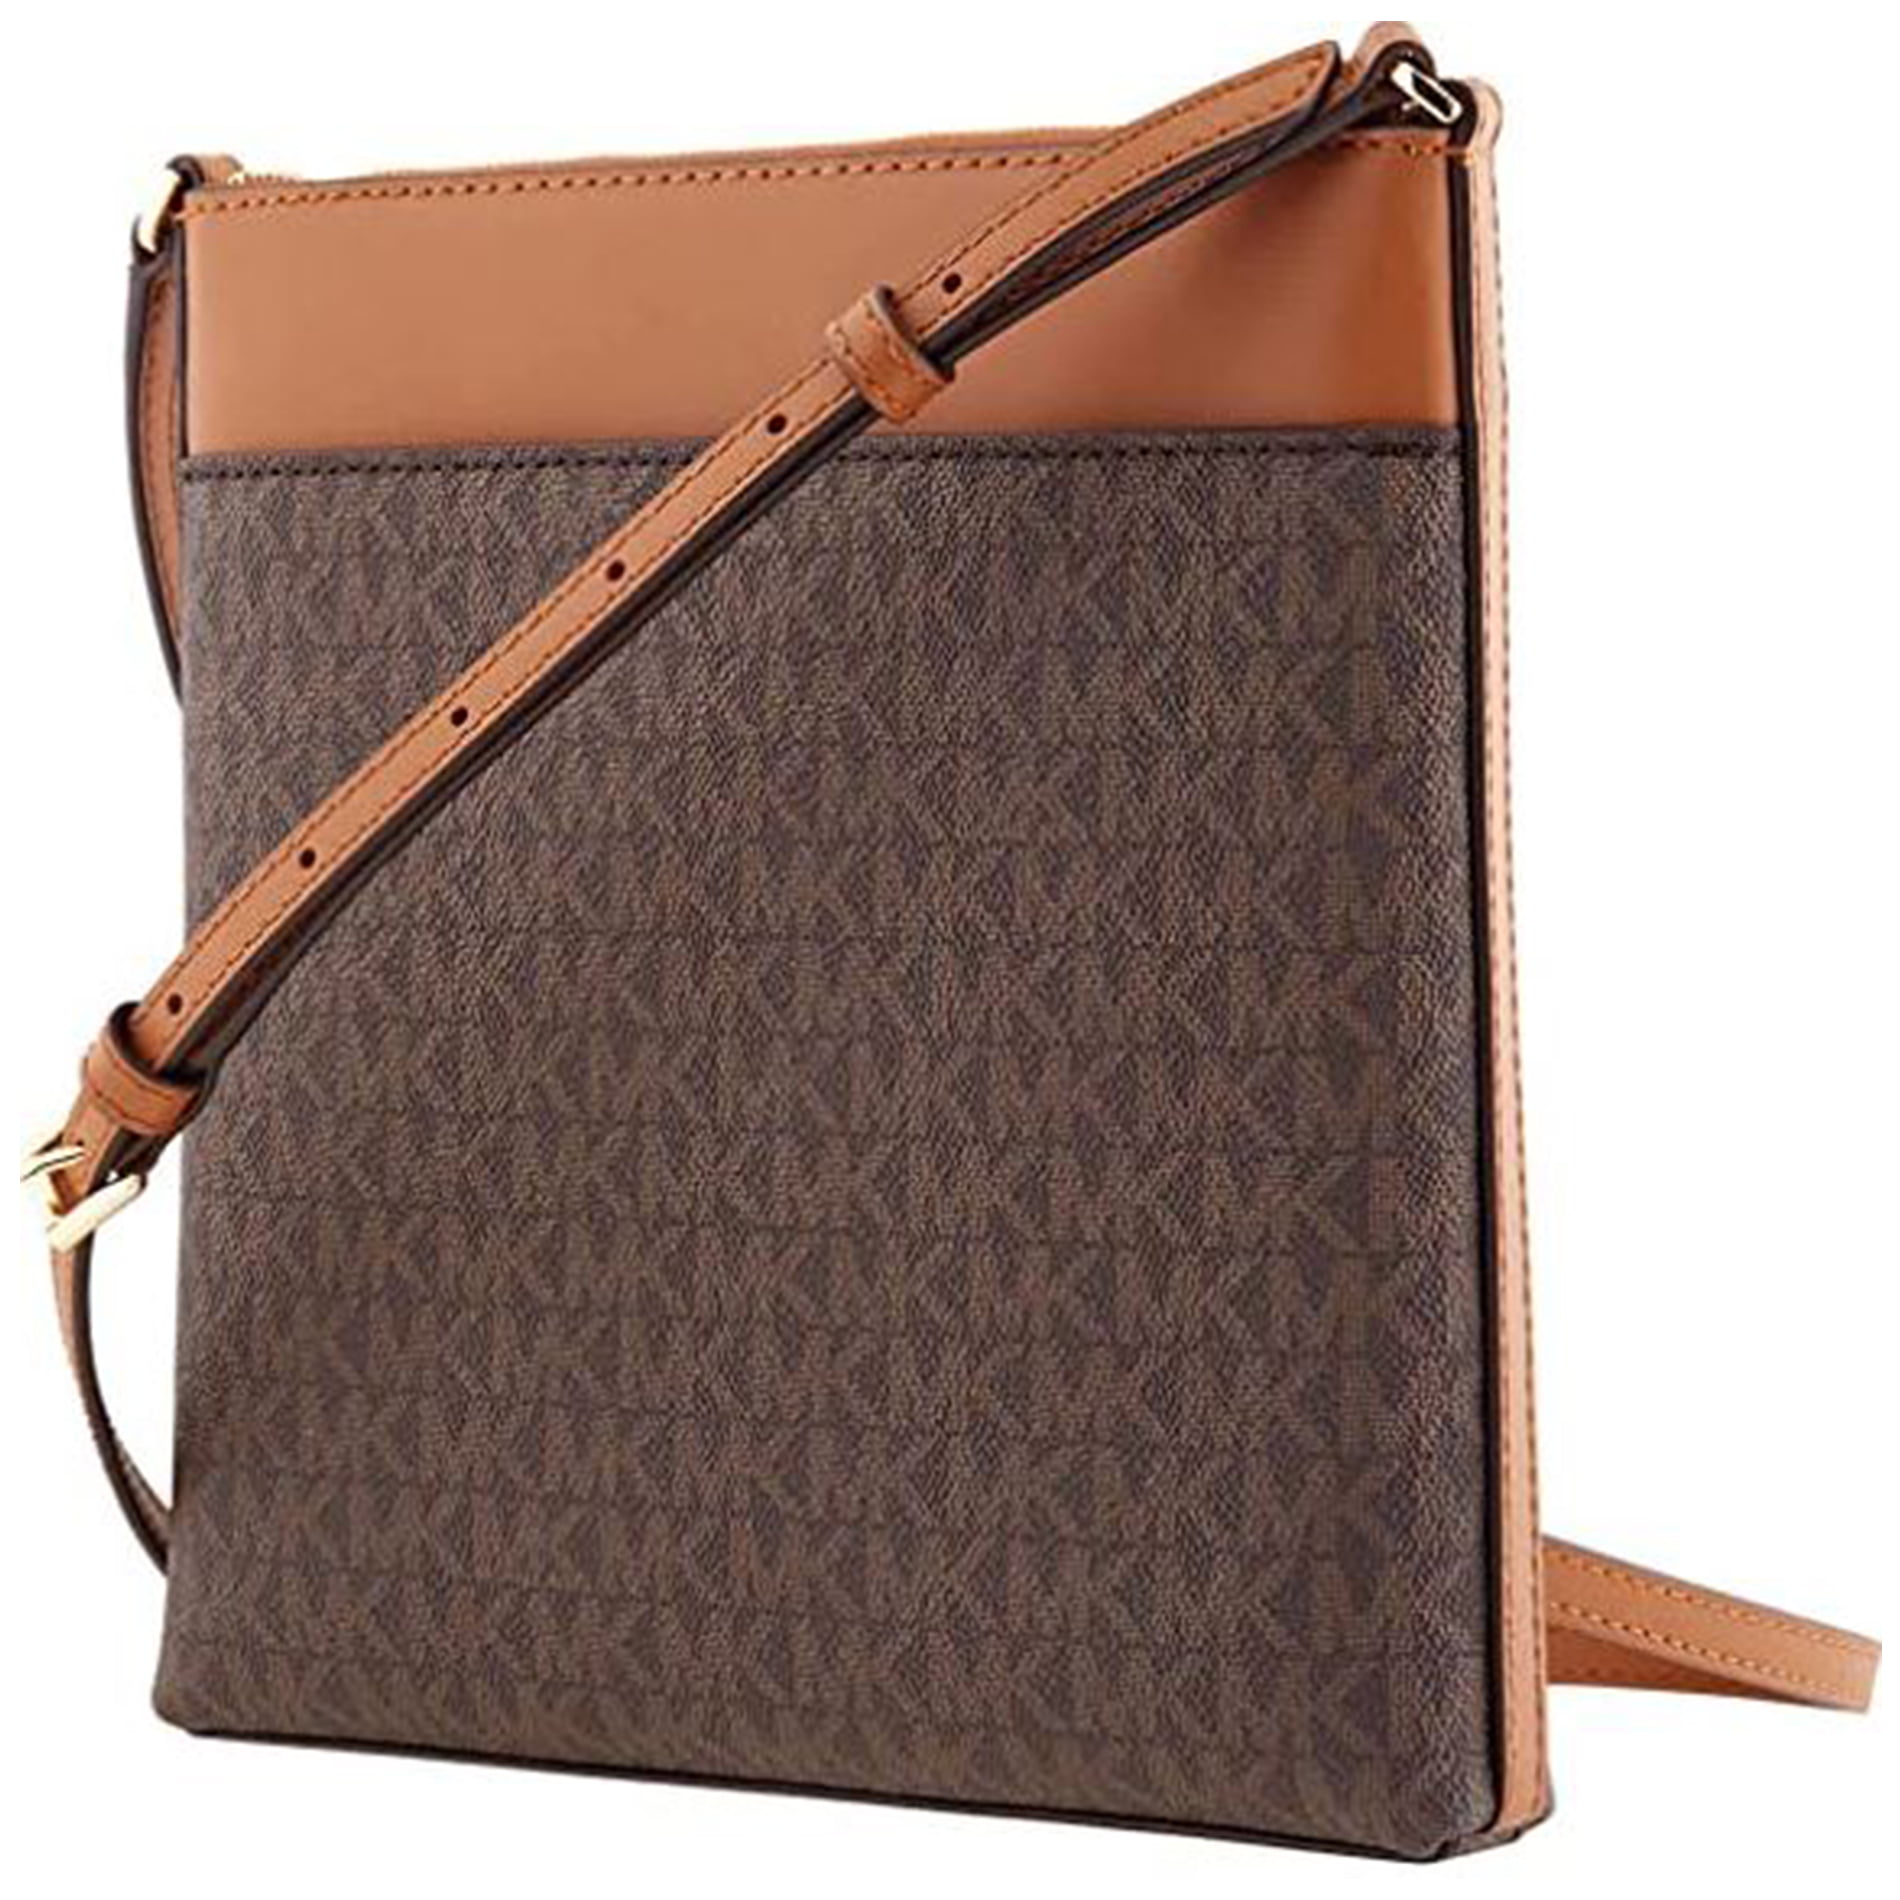 Michael Kors Sandrine Stud Signature Small Crossbody handbag in  Vanilla/Acorn - Fashion and Beauty